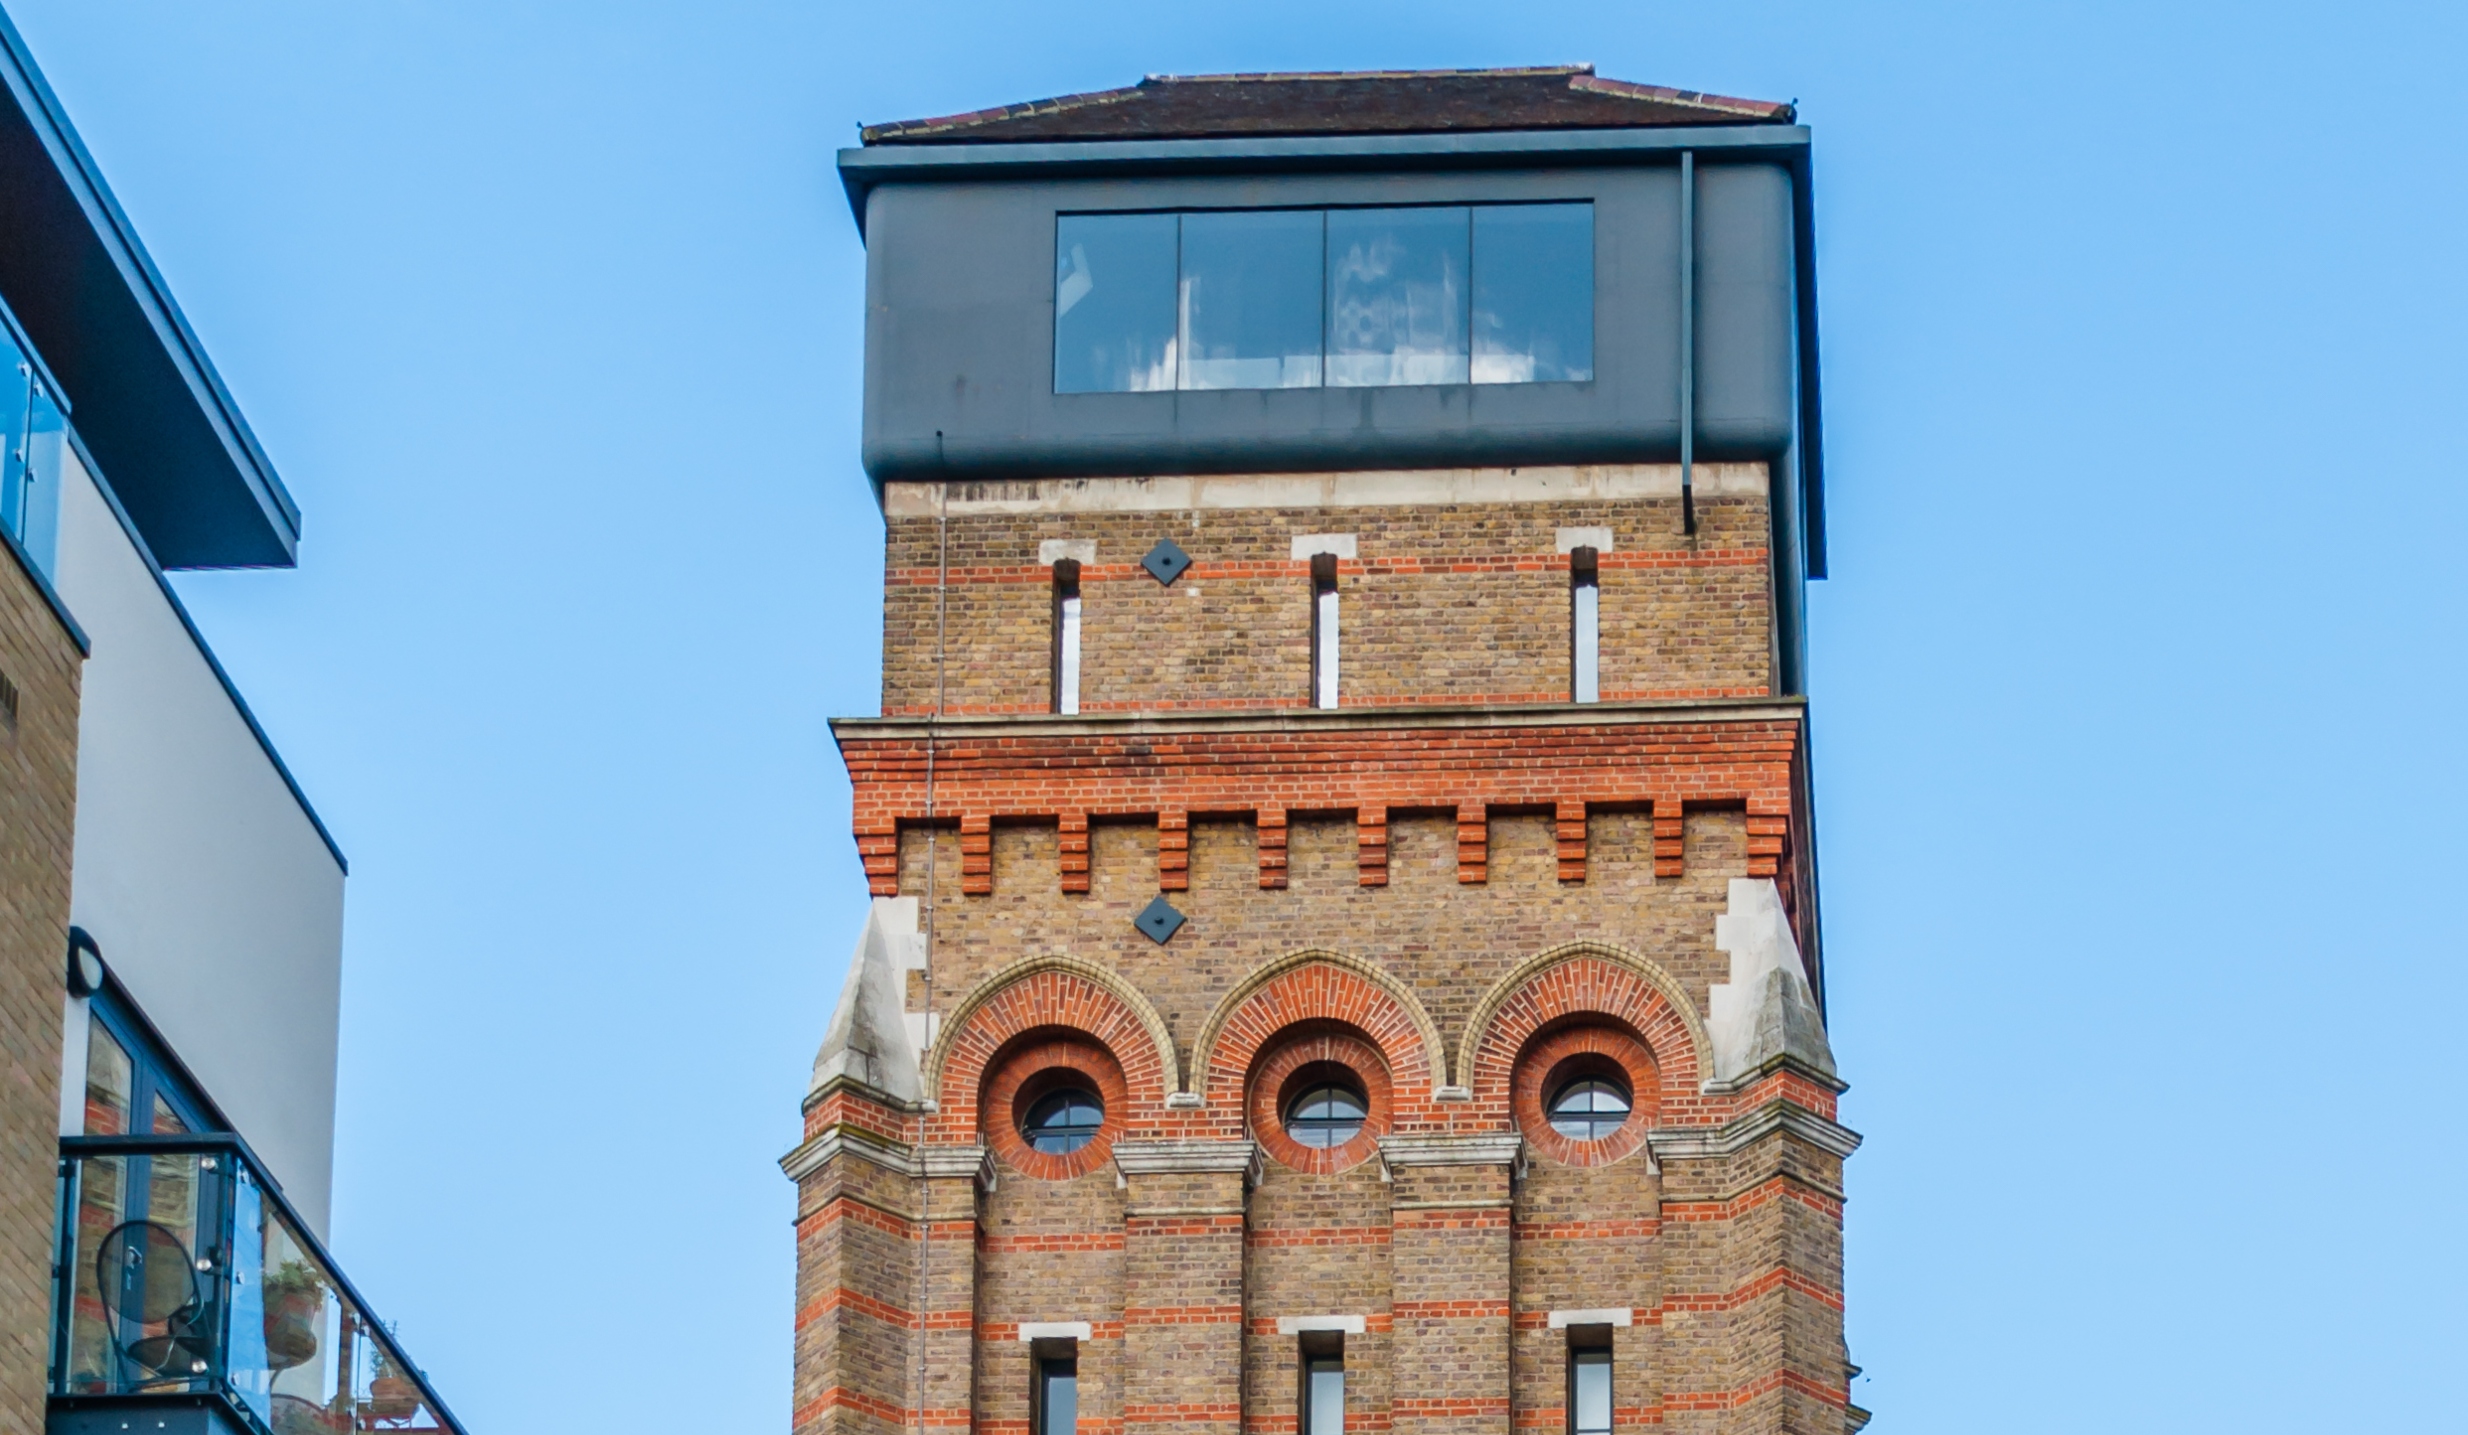 Kennington Water Tower, London